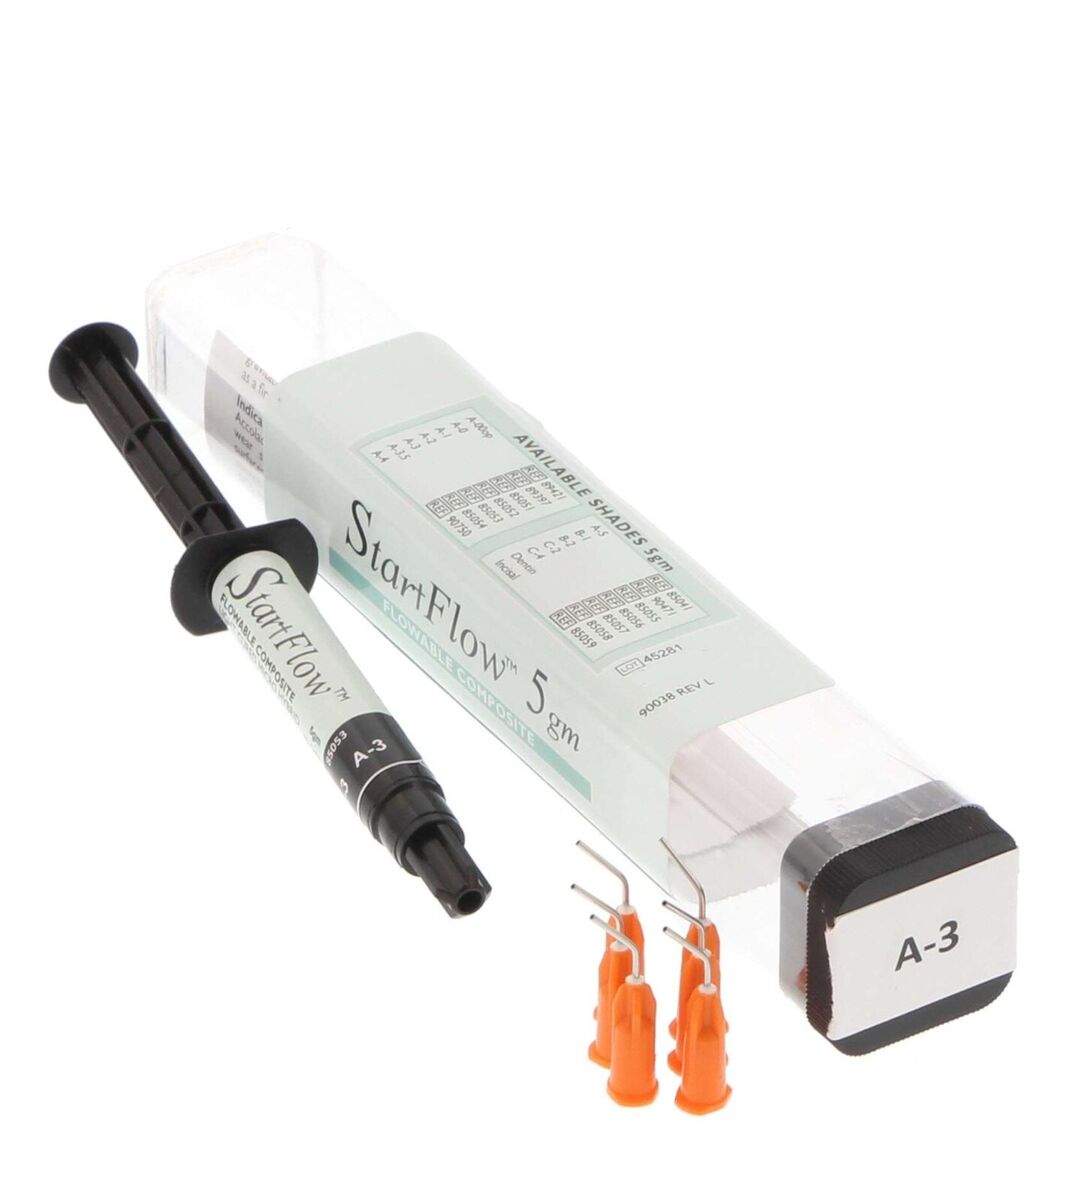 Danville 85053 StartFlow A3 Shade - Light-Cure Flowable Micro-Hybrid Composite - 5 Gm Syringe